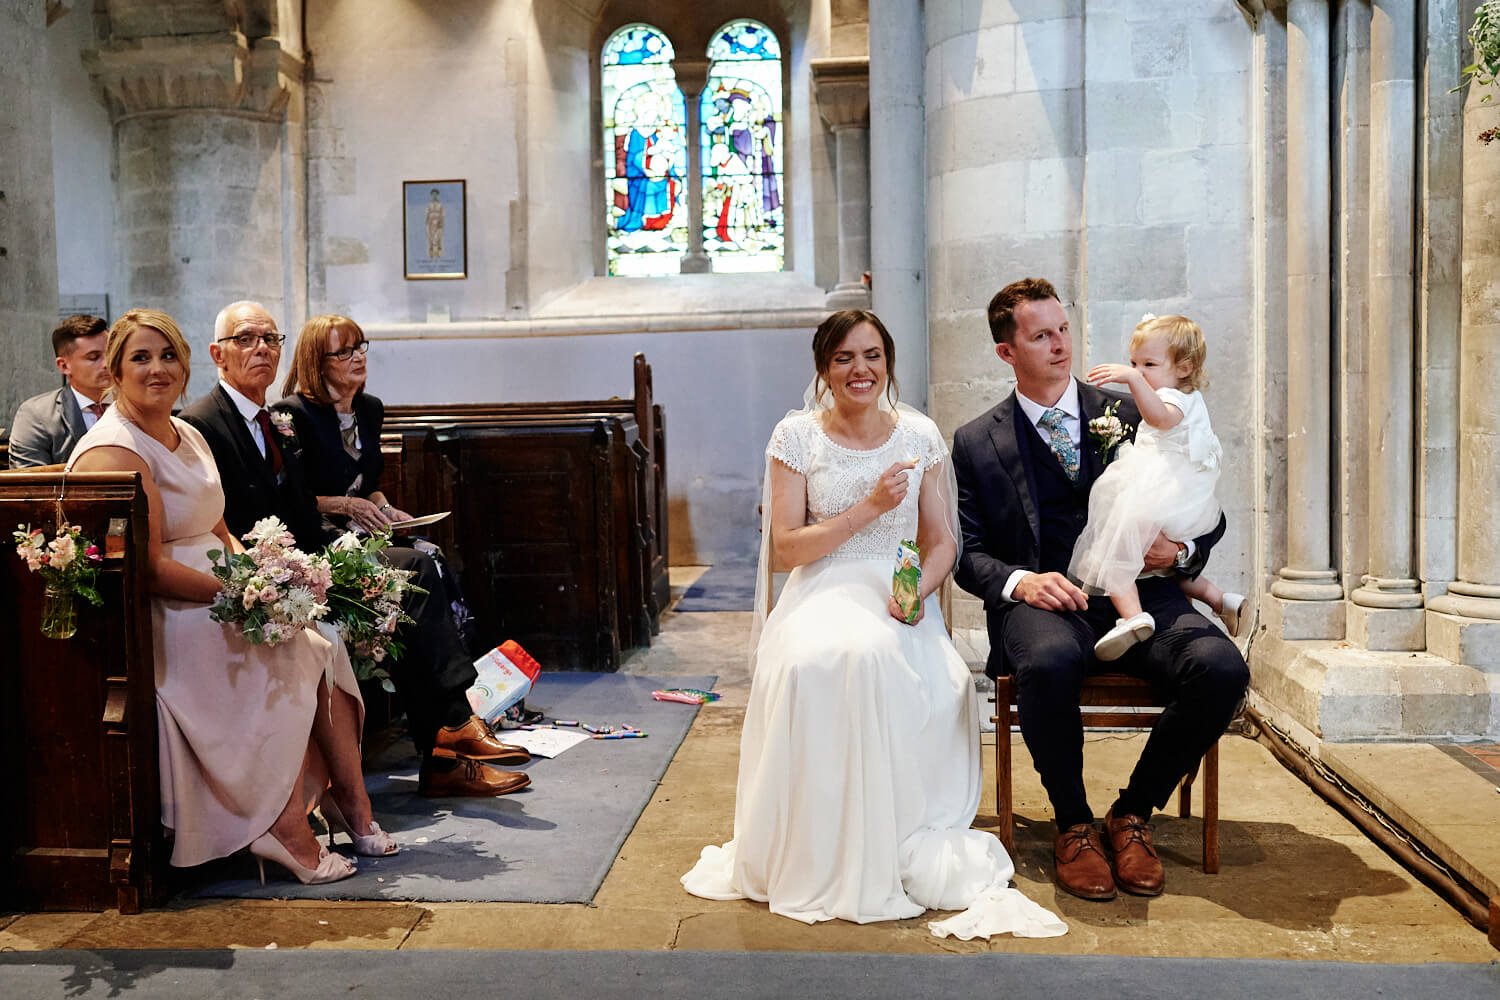 Wedding Photographer, Surrey | Leanne and Oli’s Farnham Wedding 20